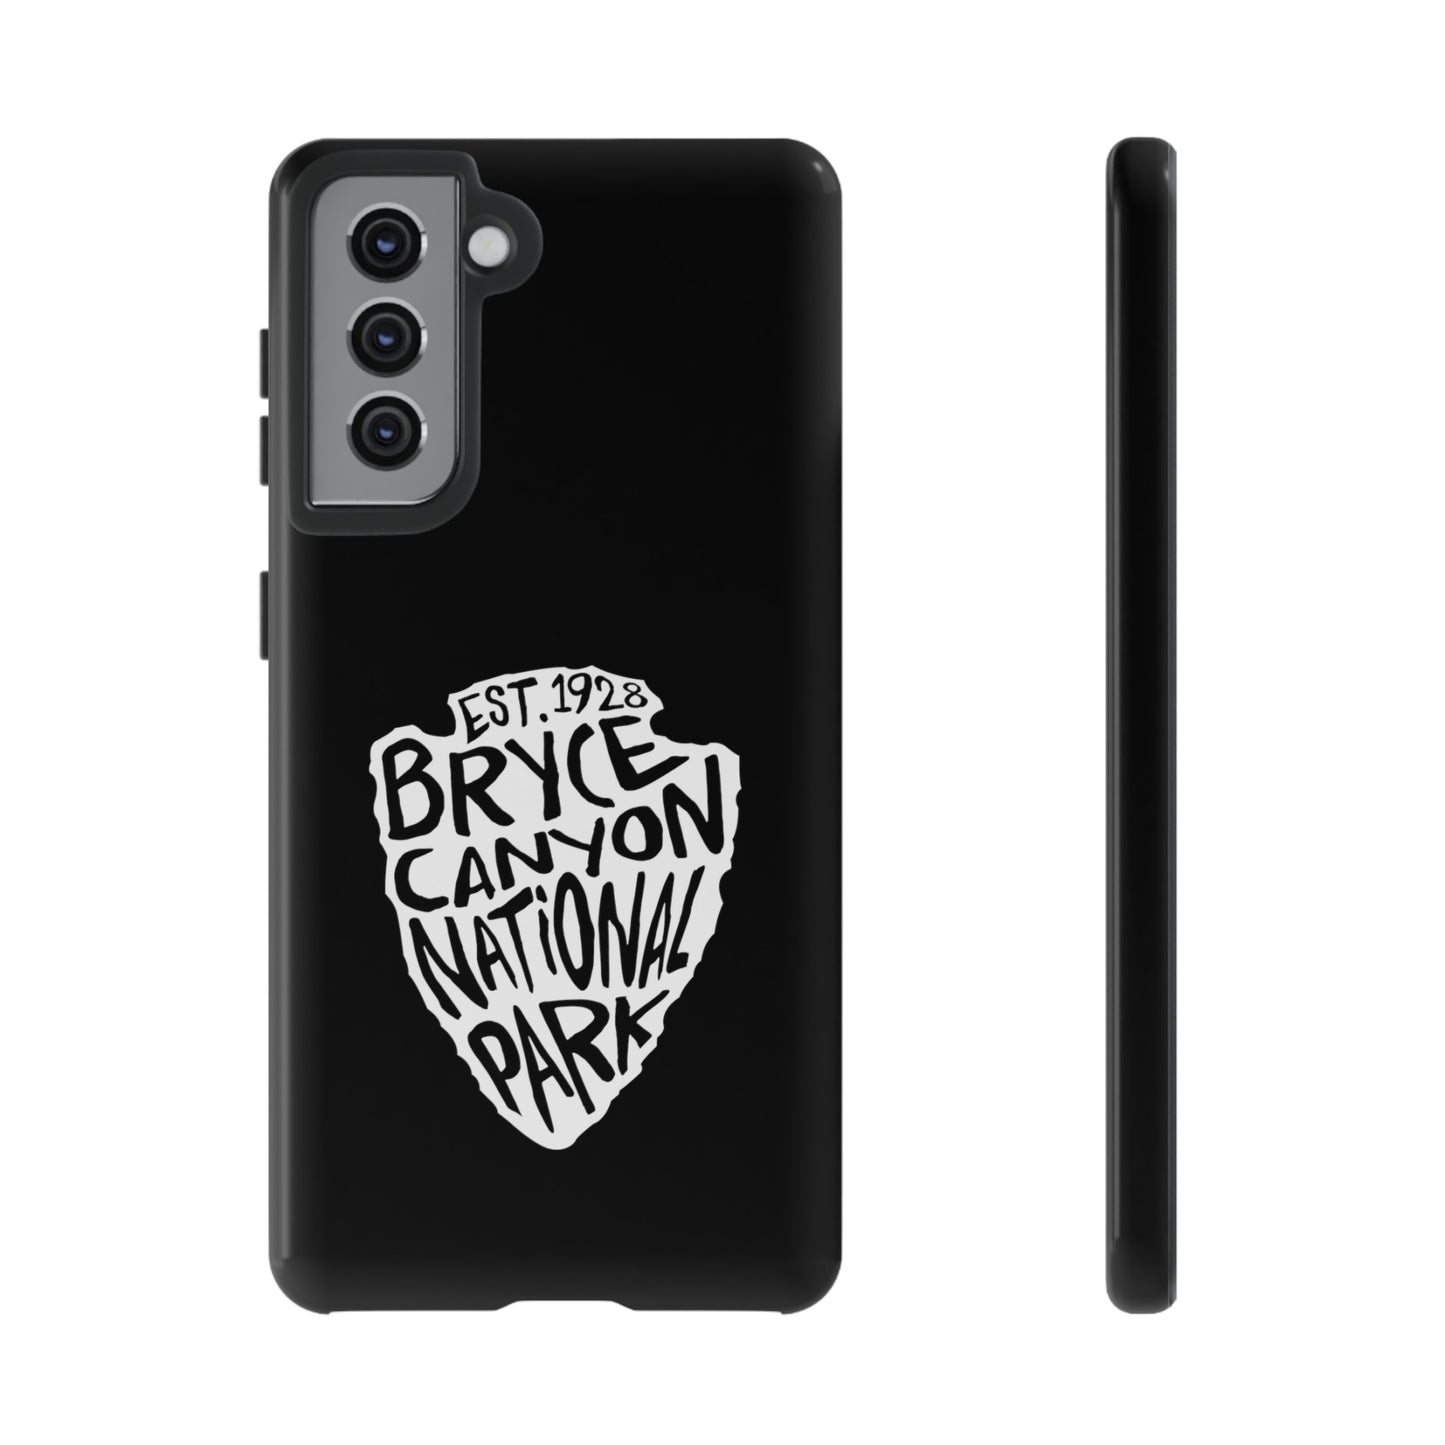 Bryce Canyon National Park Phone Case - Arrowhead Design